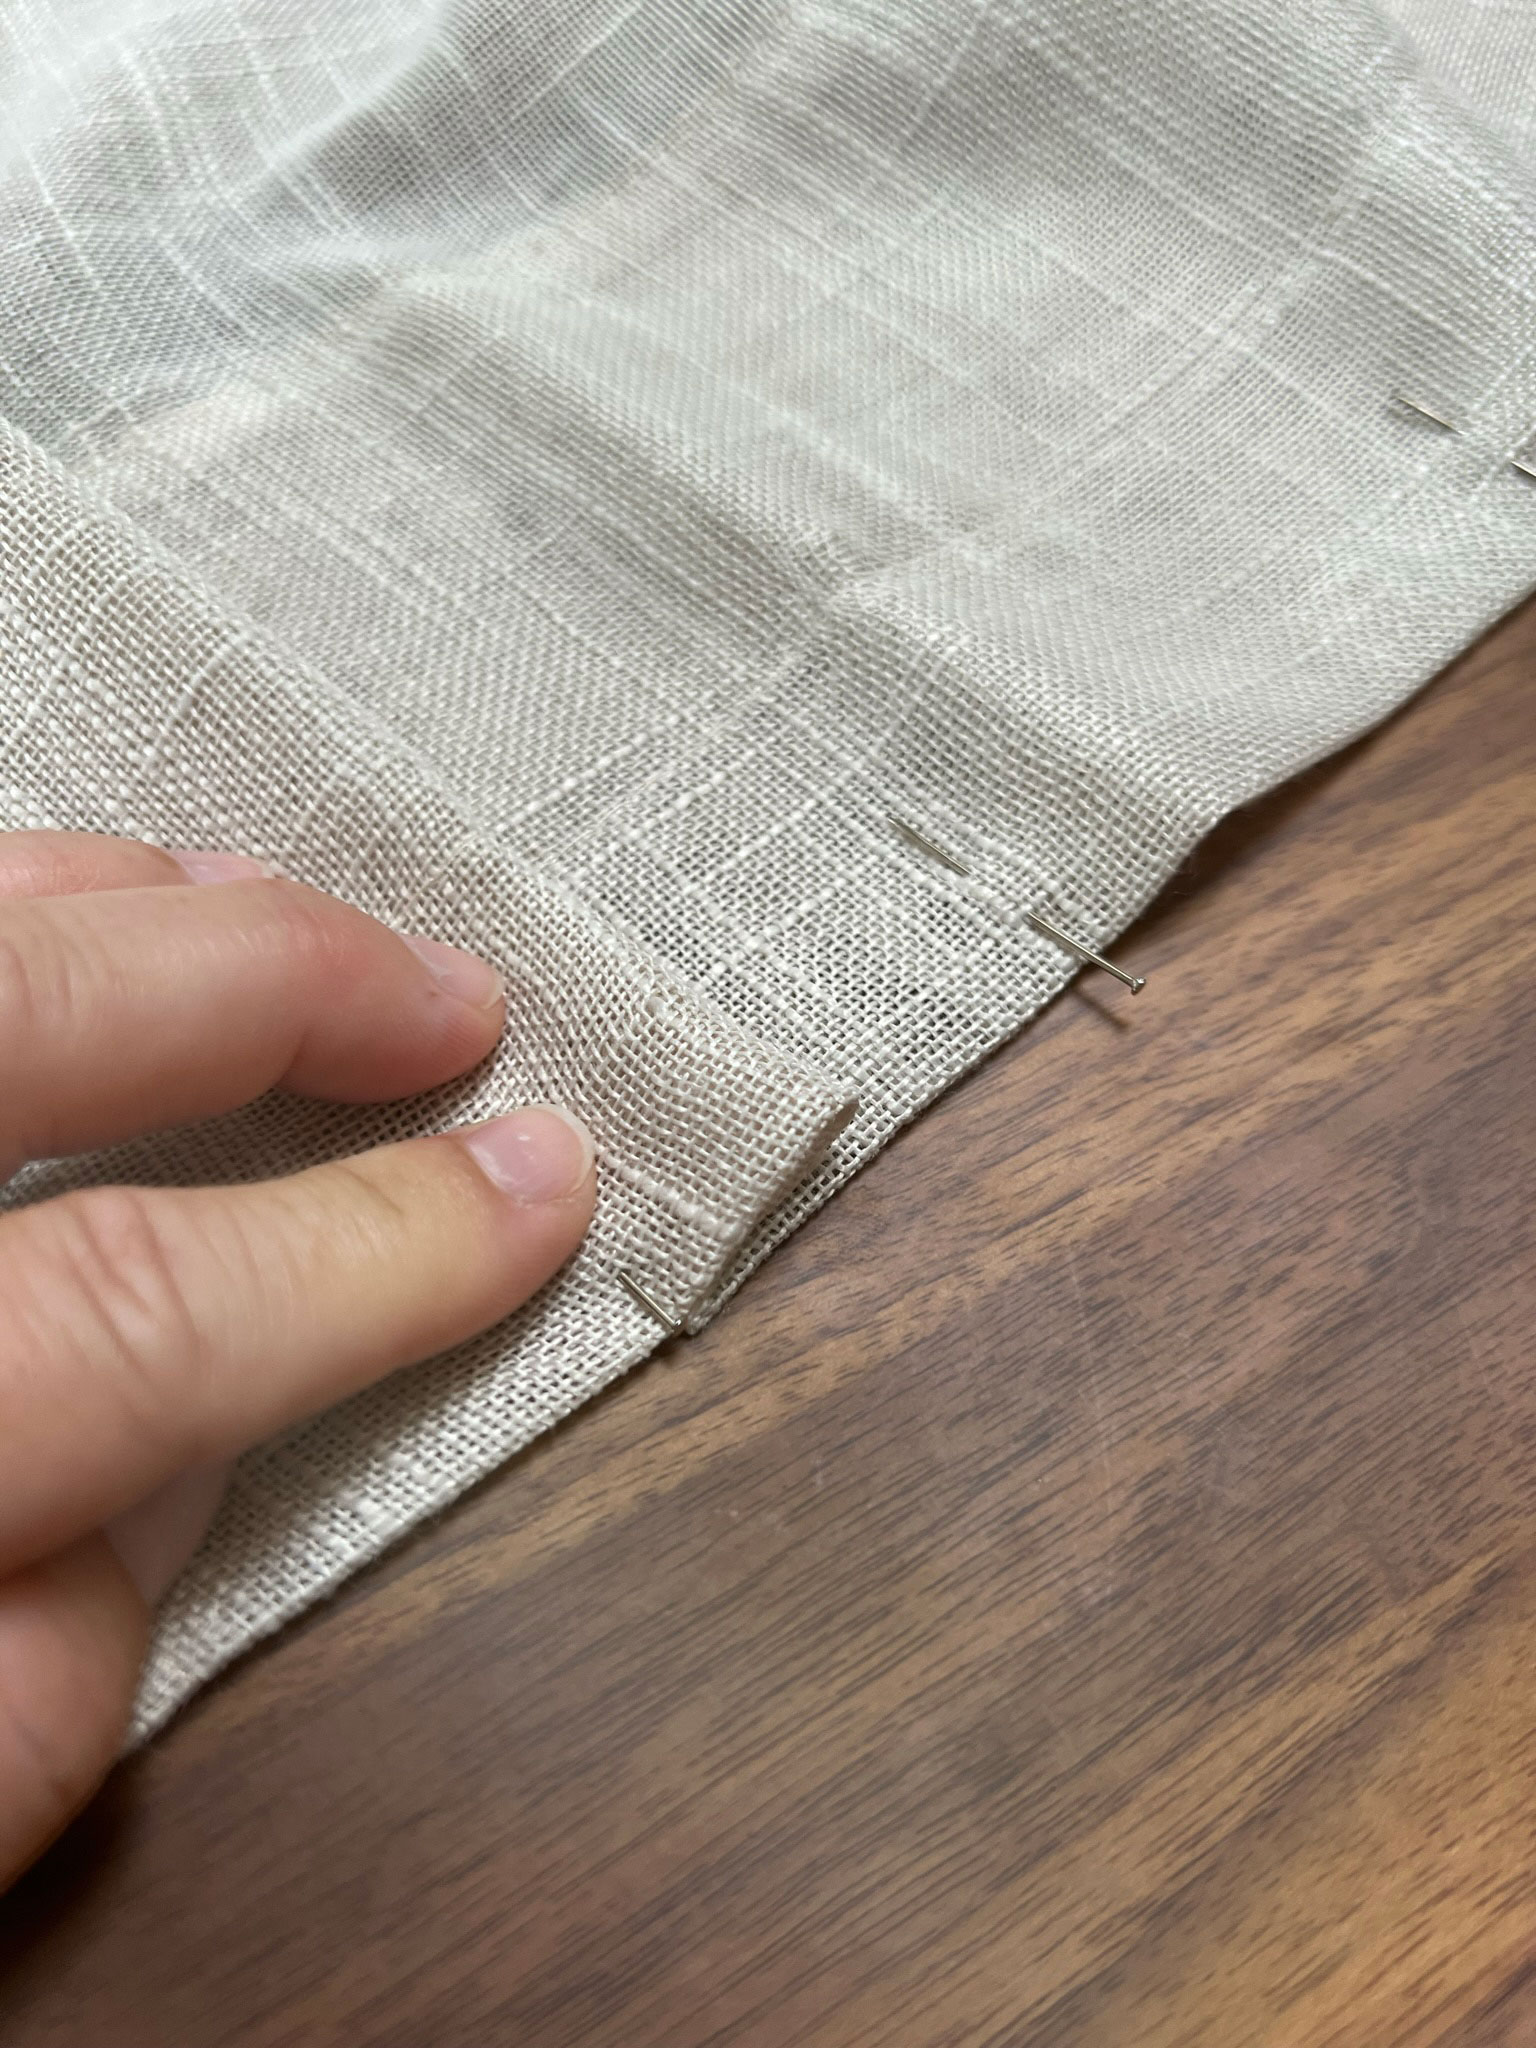 Folding fabric back again to make a pleat